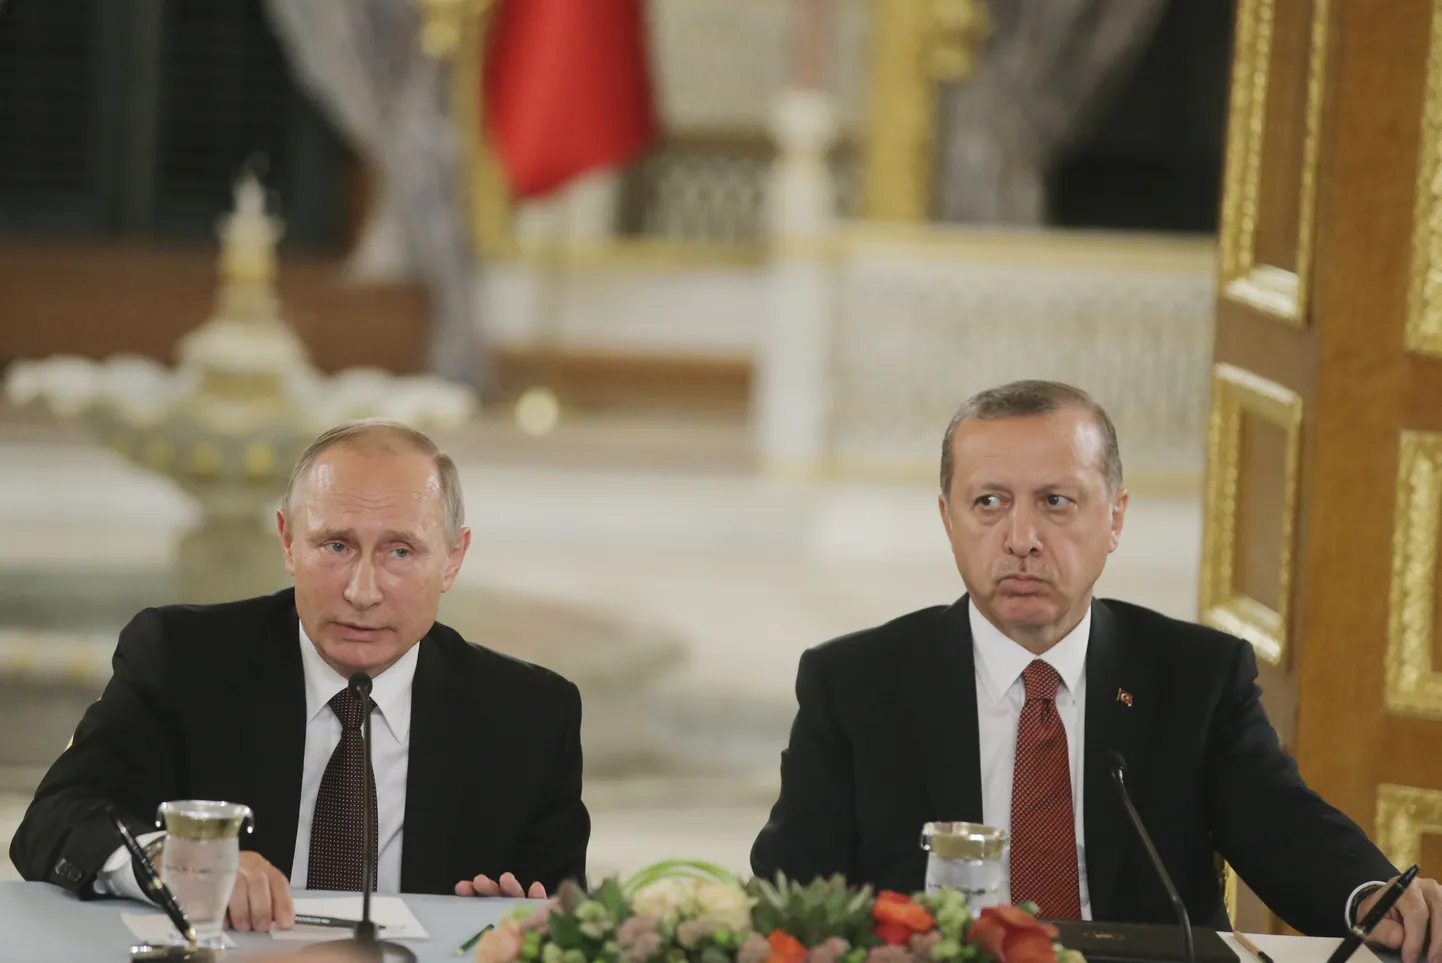 Vene president Vladimir Putin ja Türgi riigipea Recep Tayyip Erdoğan Istanbulis.